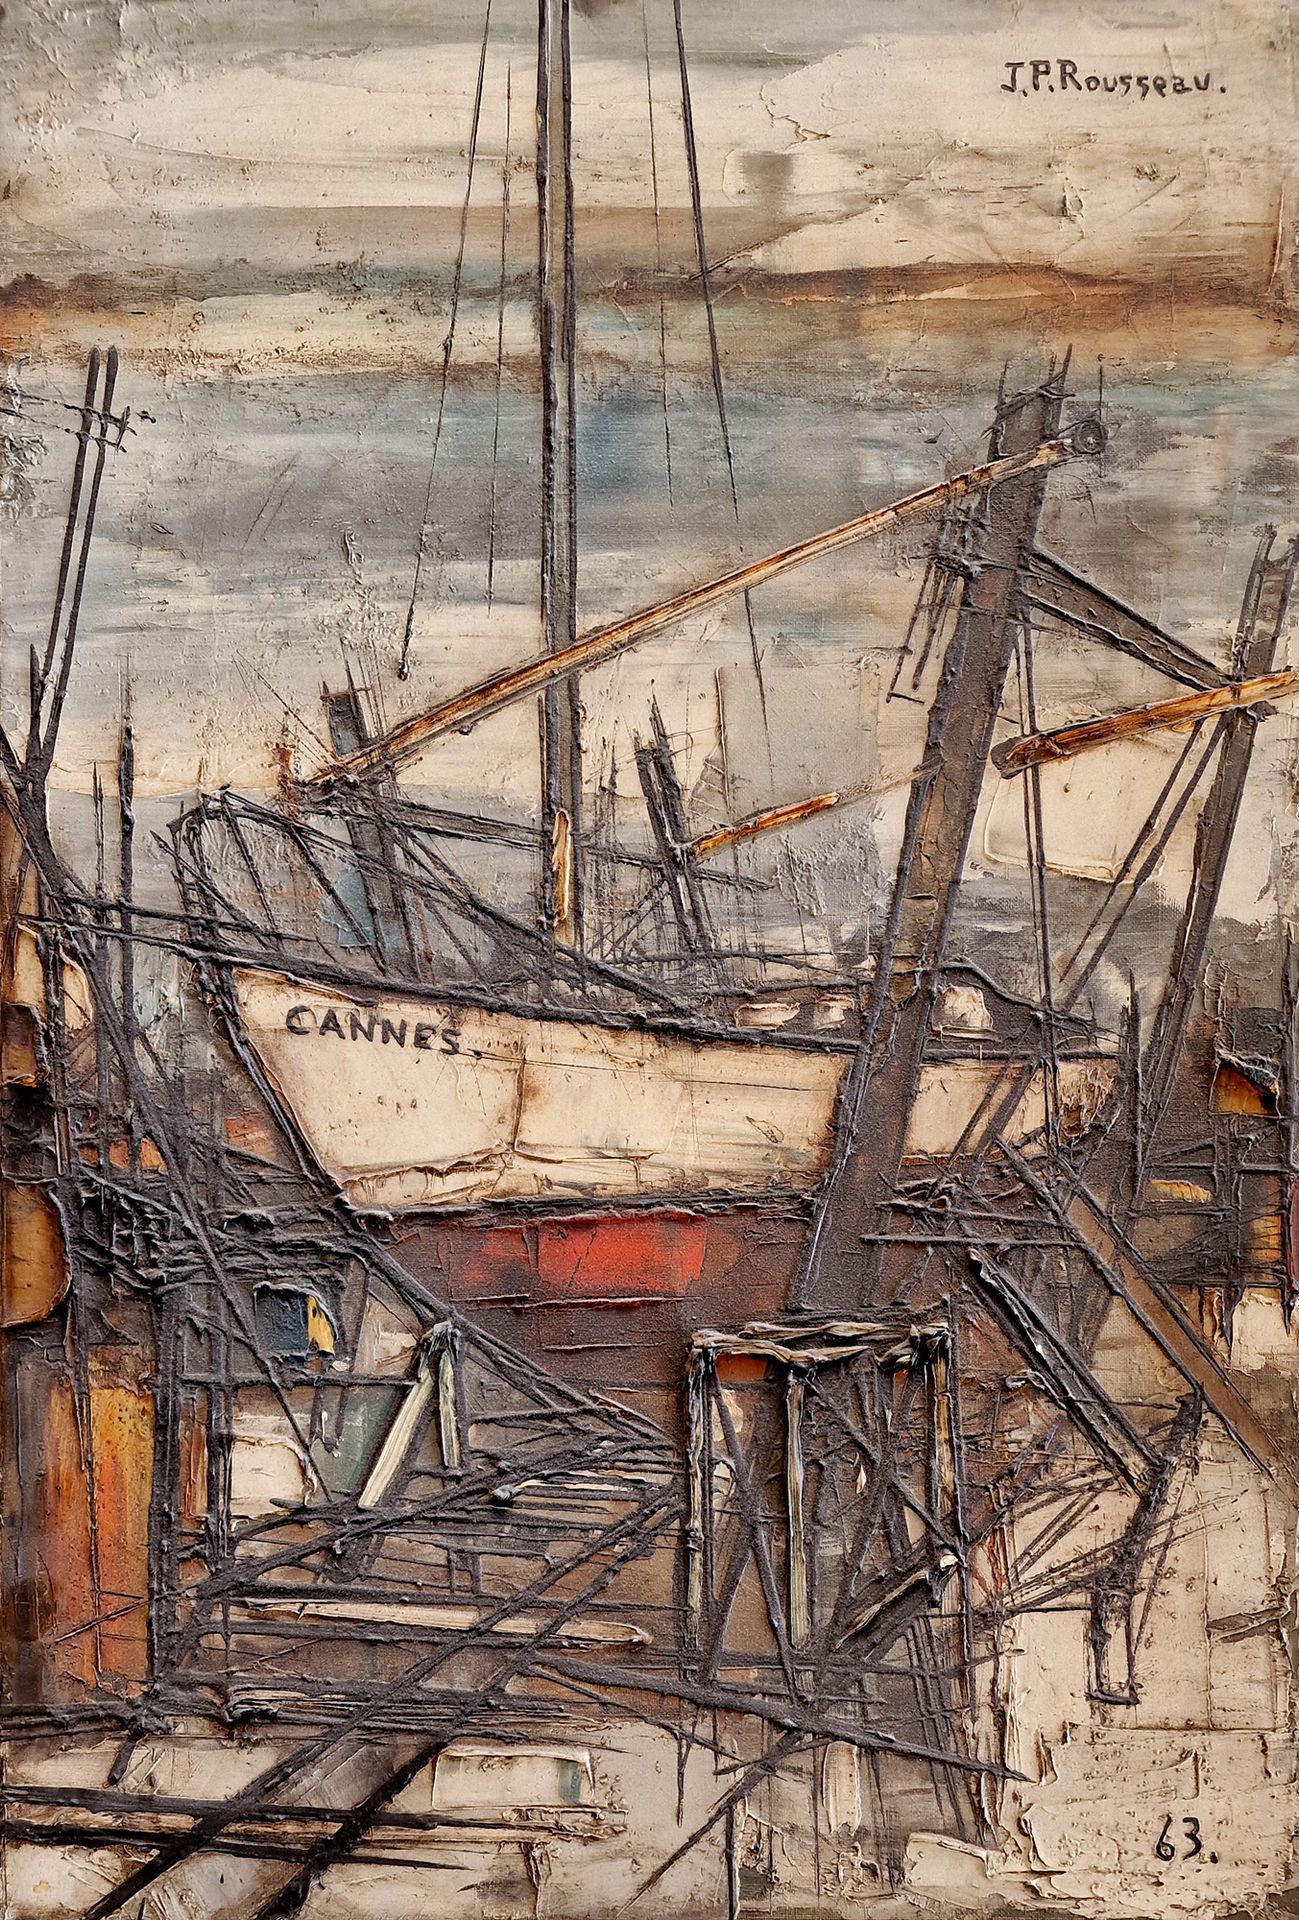 JEAN-PIERRE ROUSSEAU (1939) 戛纳，干船坞中的帆船



布面油画，右上方有签名，底部有日期63。没有装裱。

让-皮埃尔-卢梭是一位&hellip;